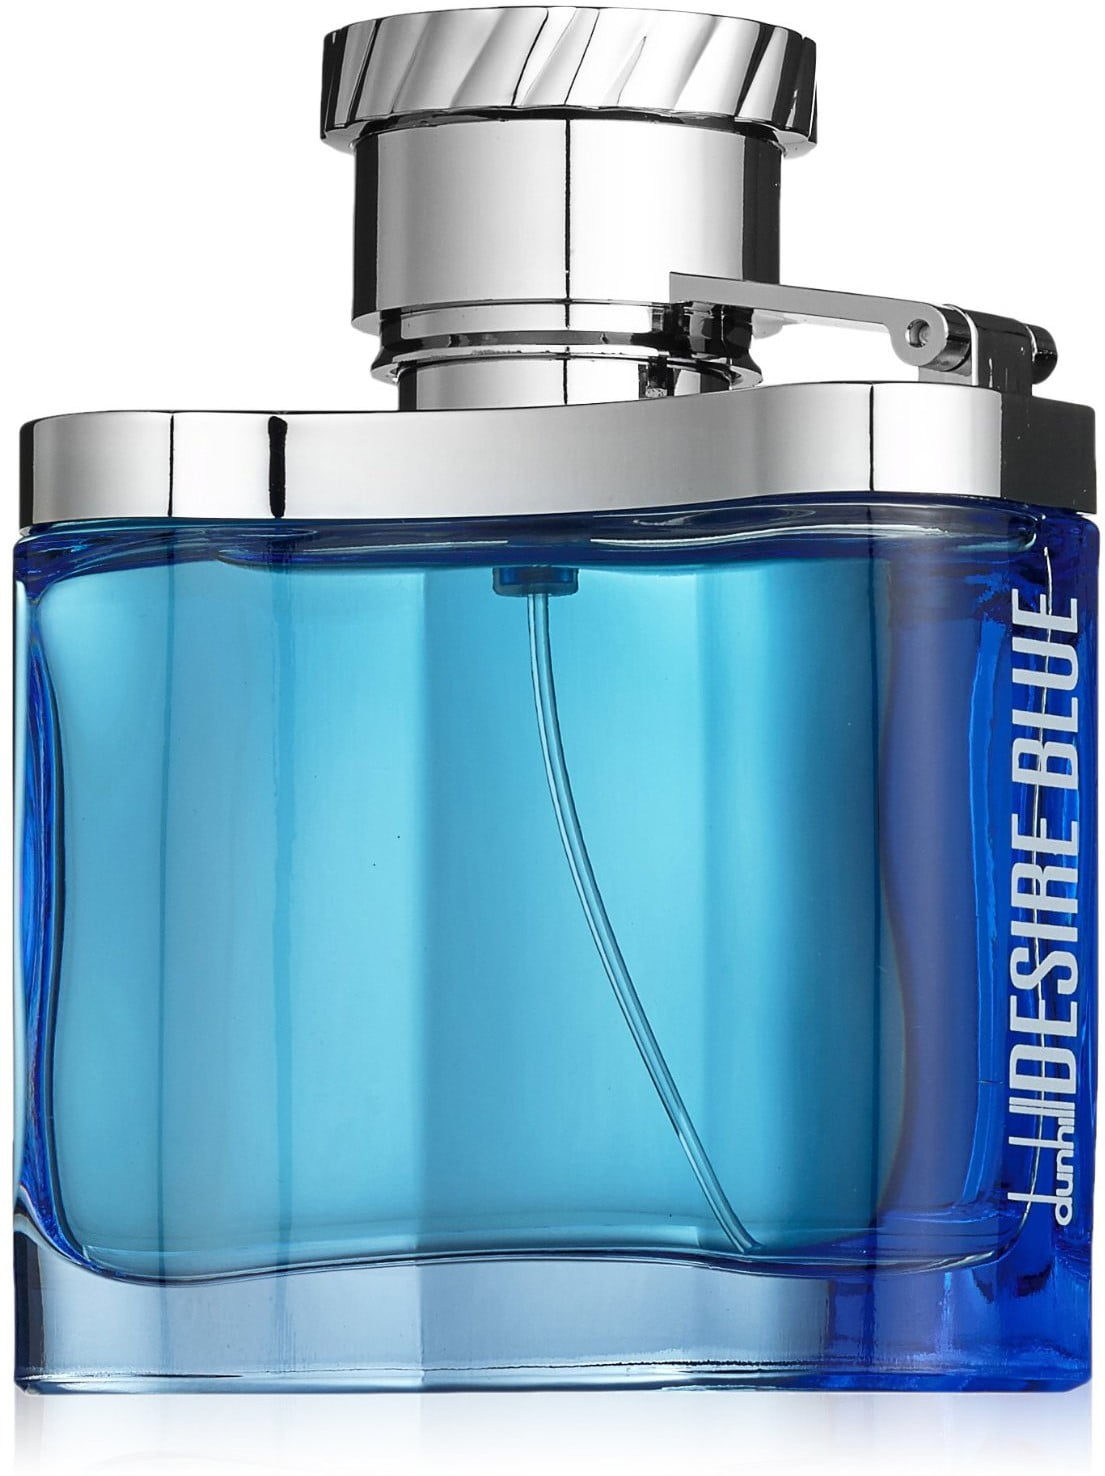 dunhill light blue perfume